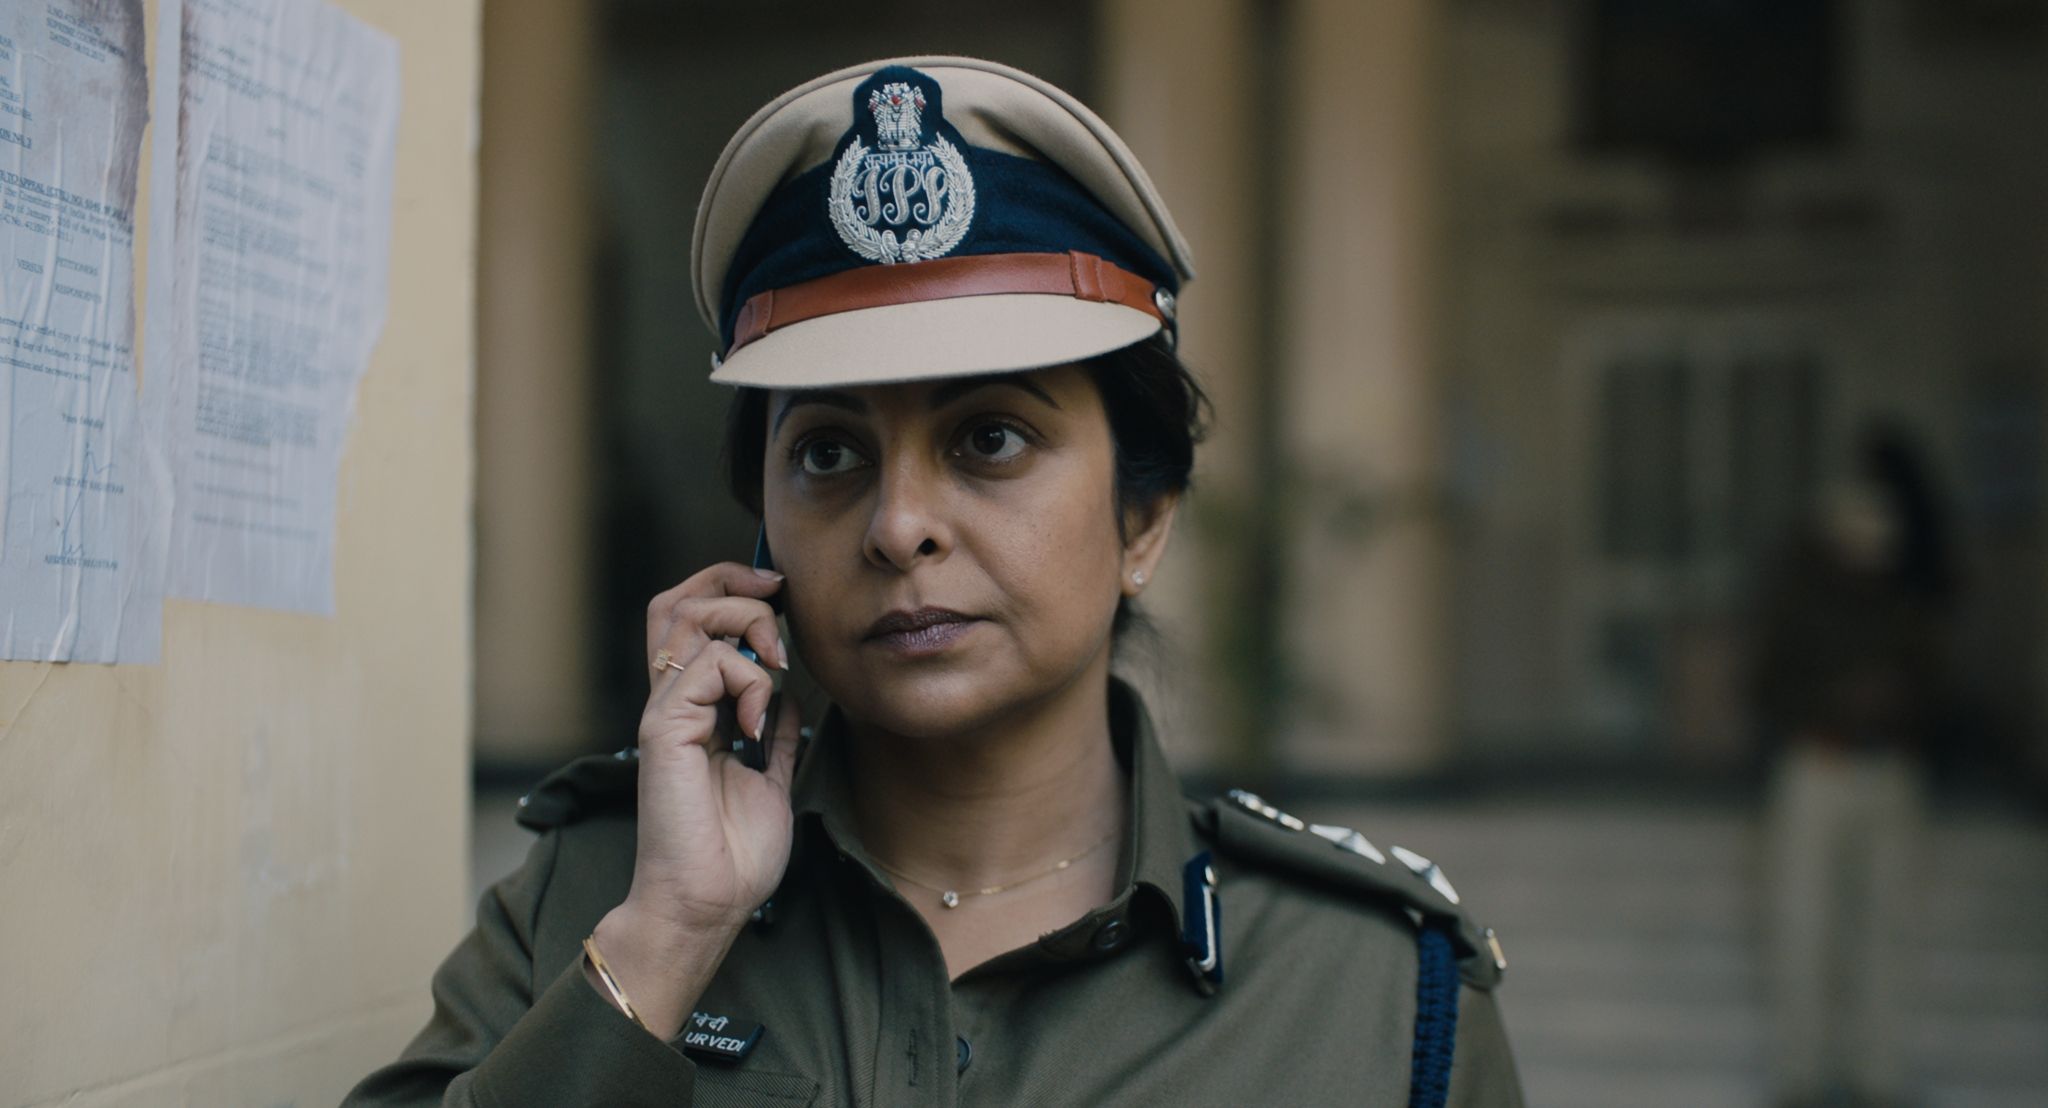 Delhi Police Xxx - The True Story Behind Netflix's 'Delhi Crime' Is Absolutely Horrific